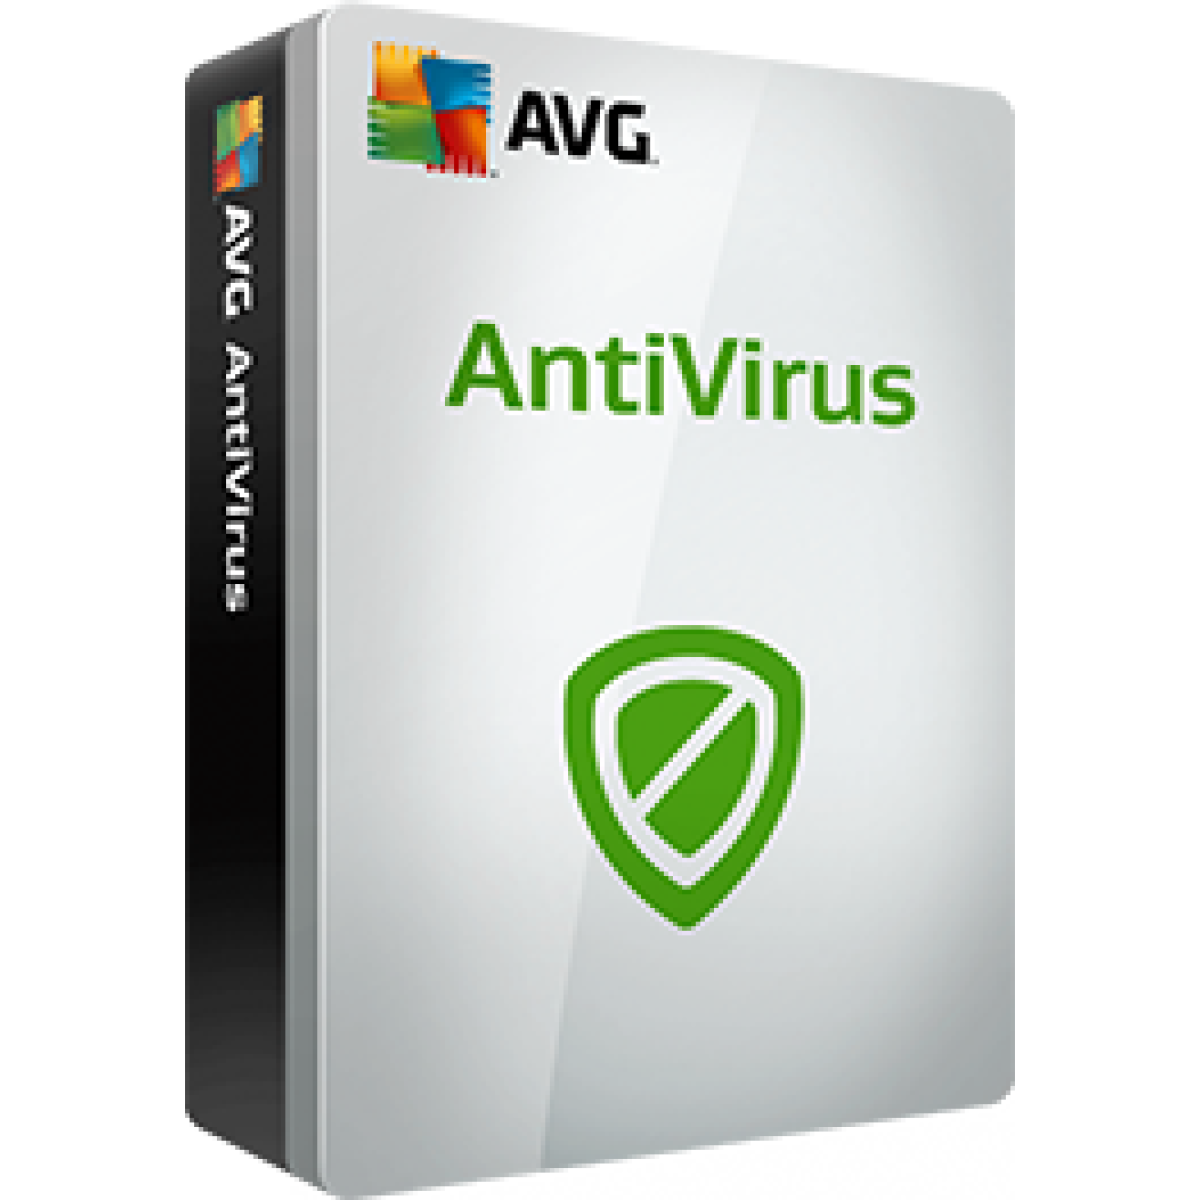 avg antivirus one year key